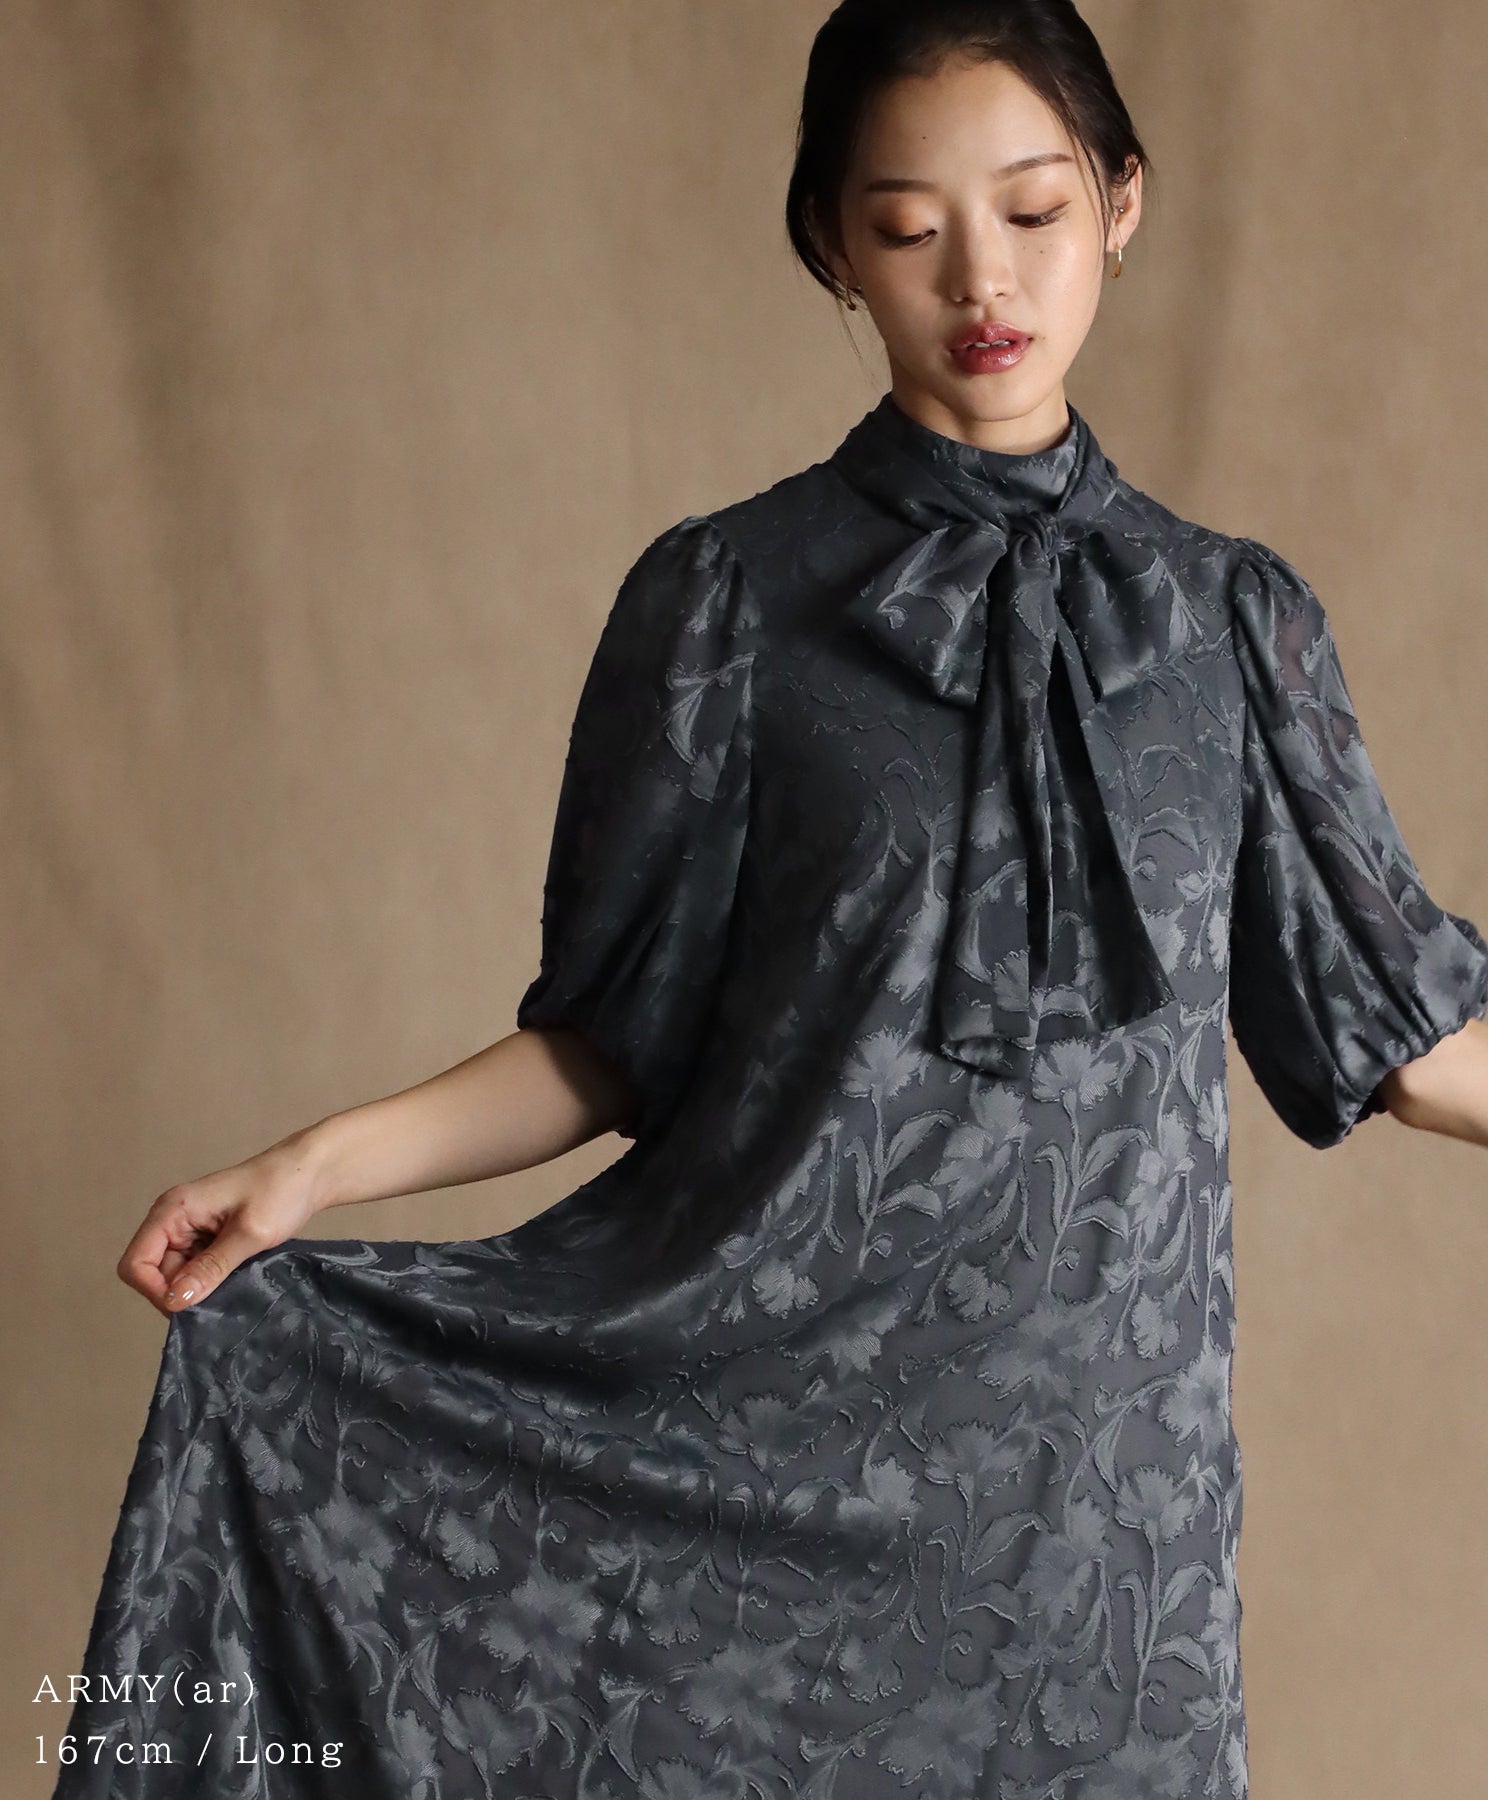 TIME SALE】日本製 インナー付きバックリボンジャガードドレス – BLUE 